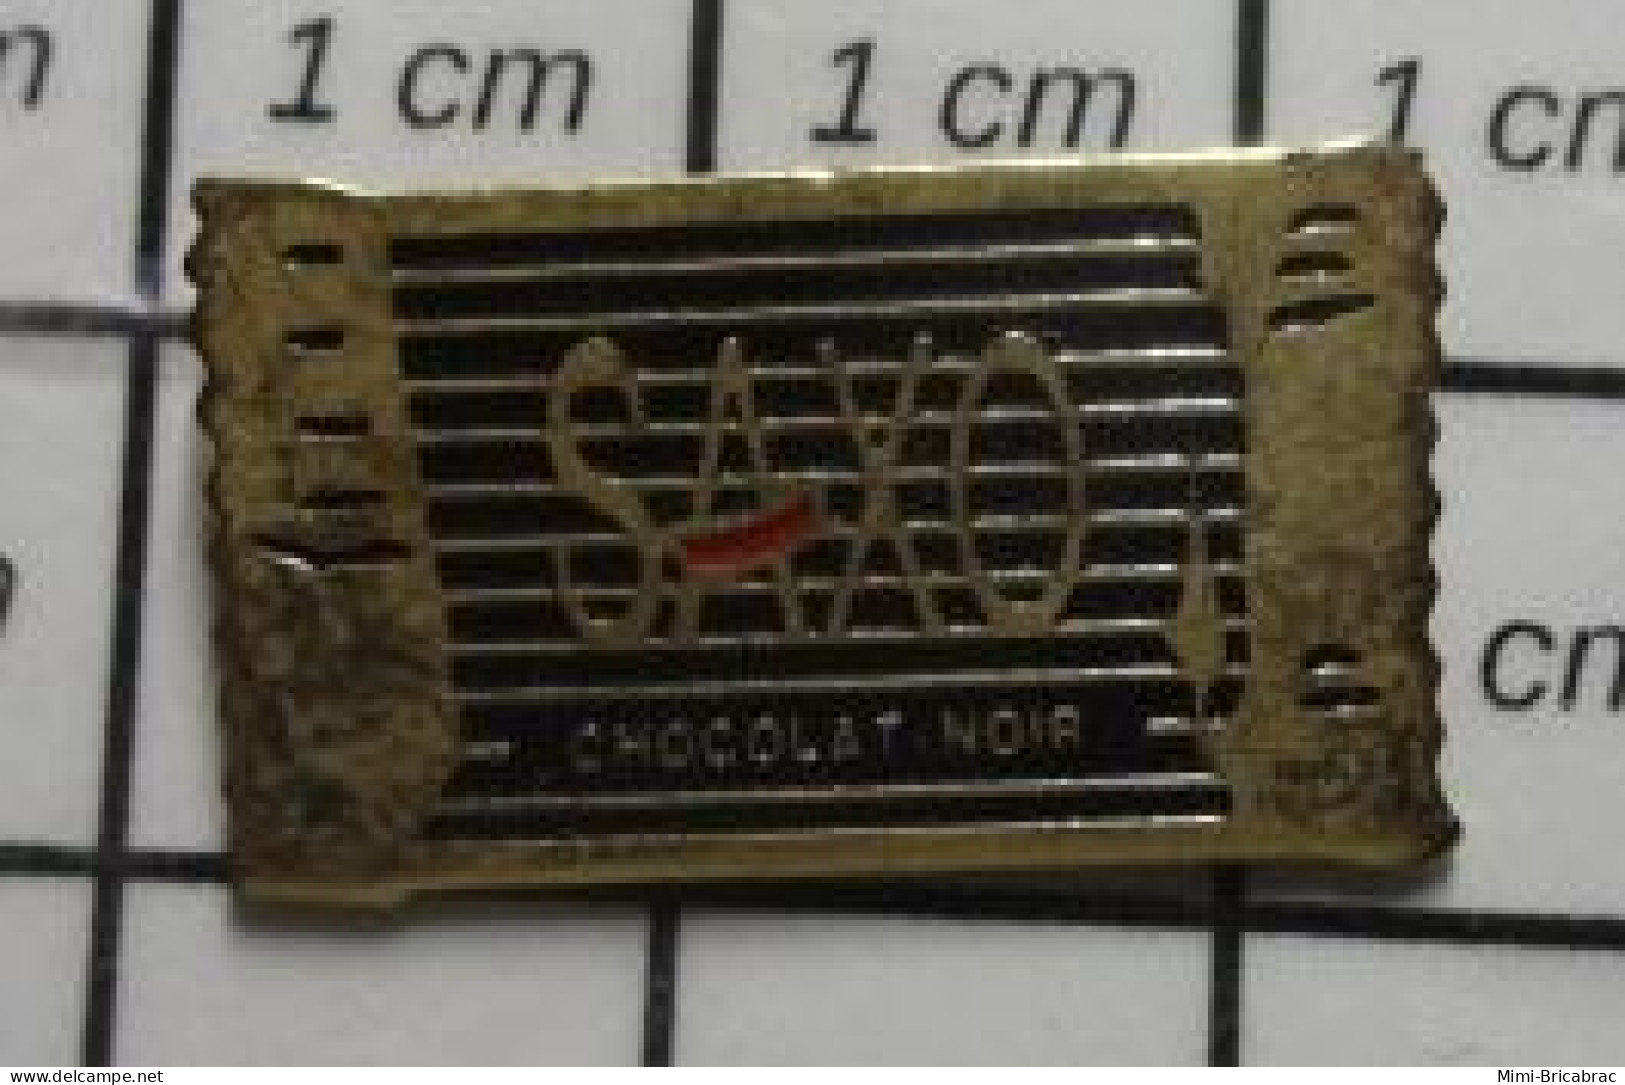 912e  Pin's Pins / Beau Et Rare / ALIMENTATION / SAXO CHOCOLAT NOIR - Lebensmittel